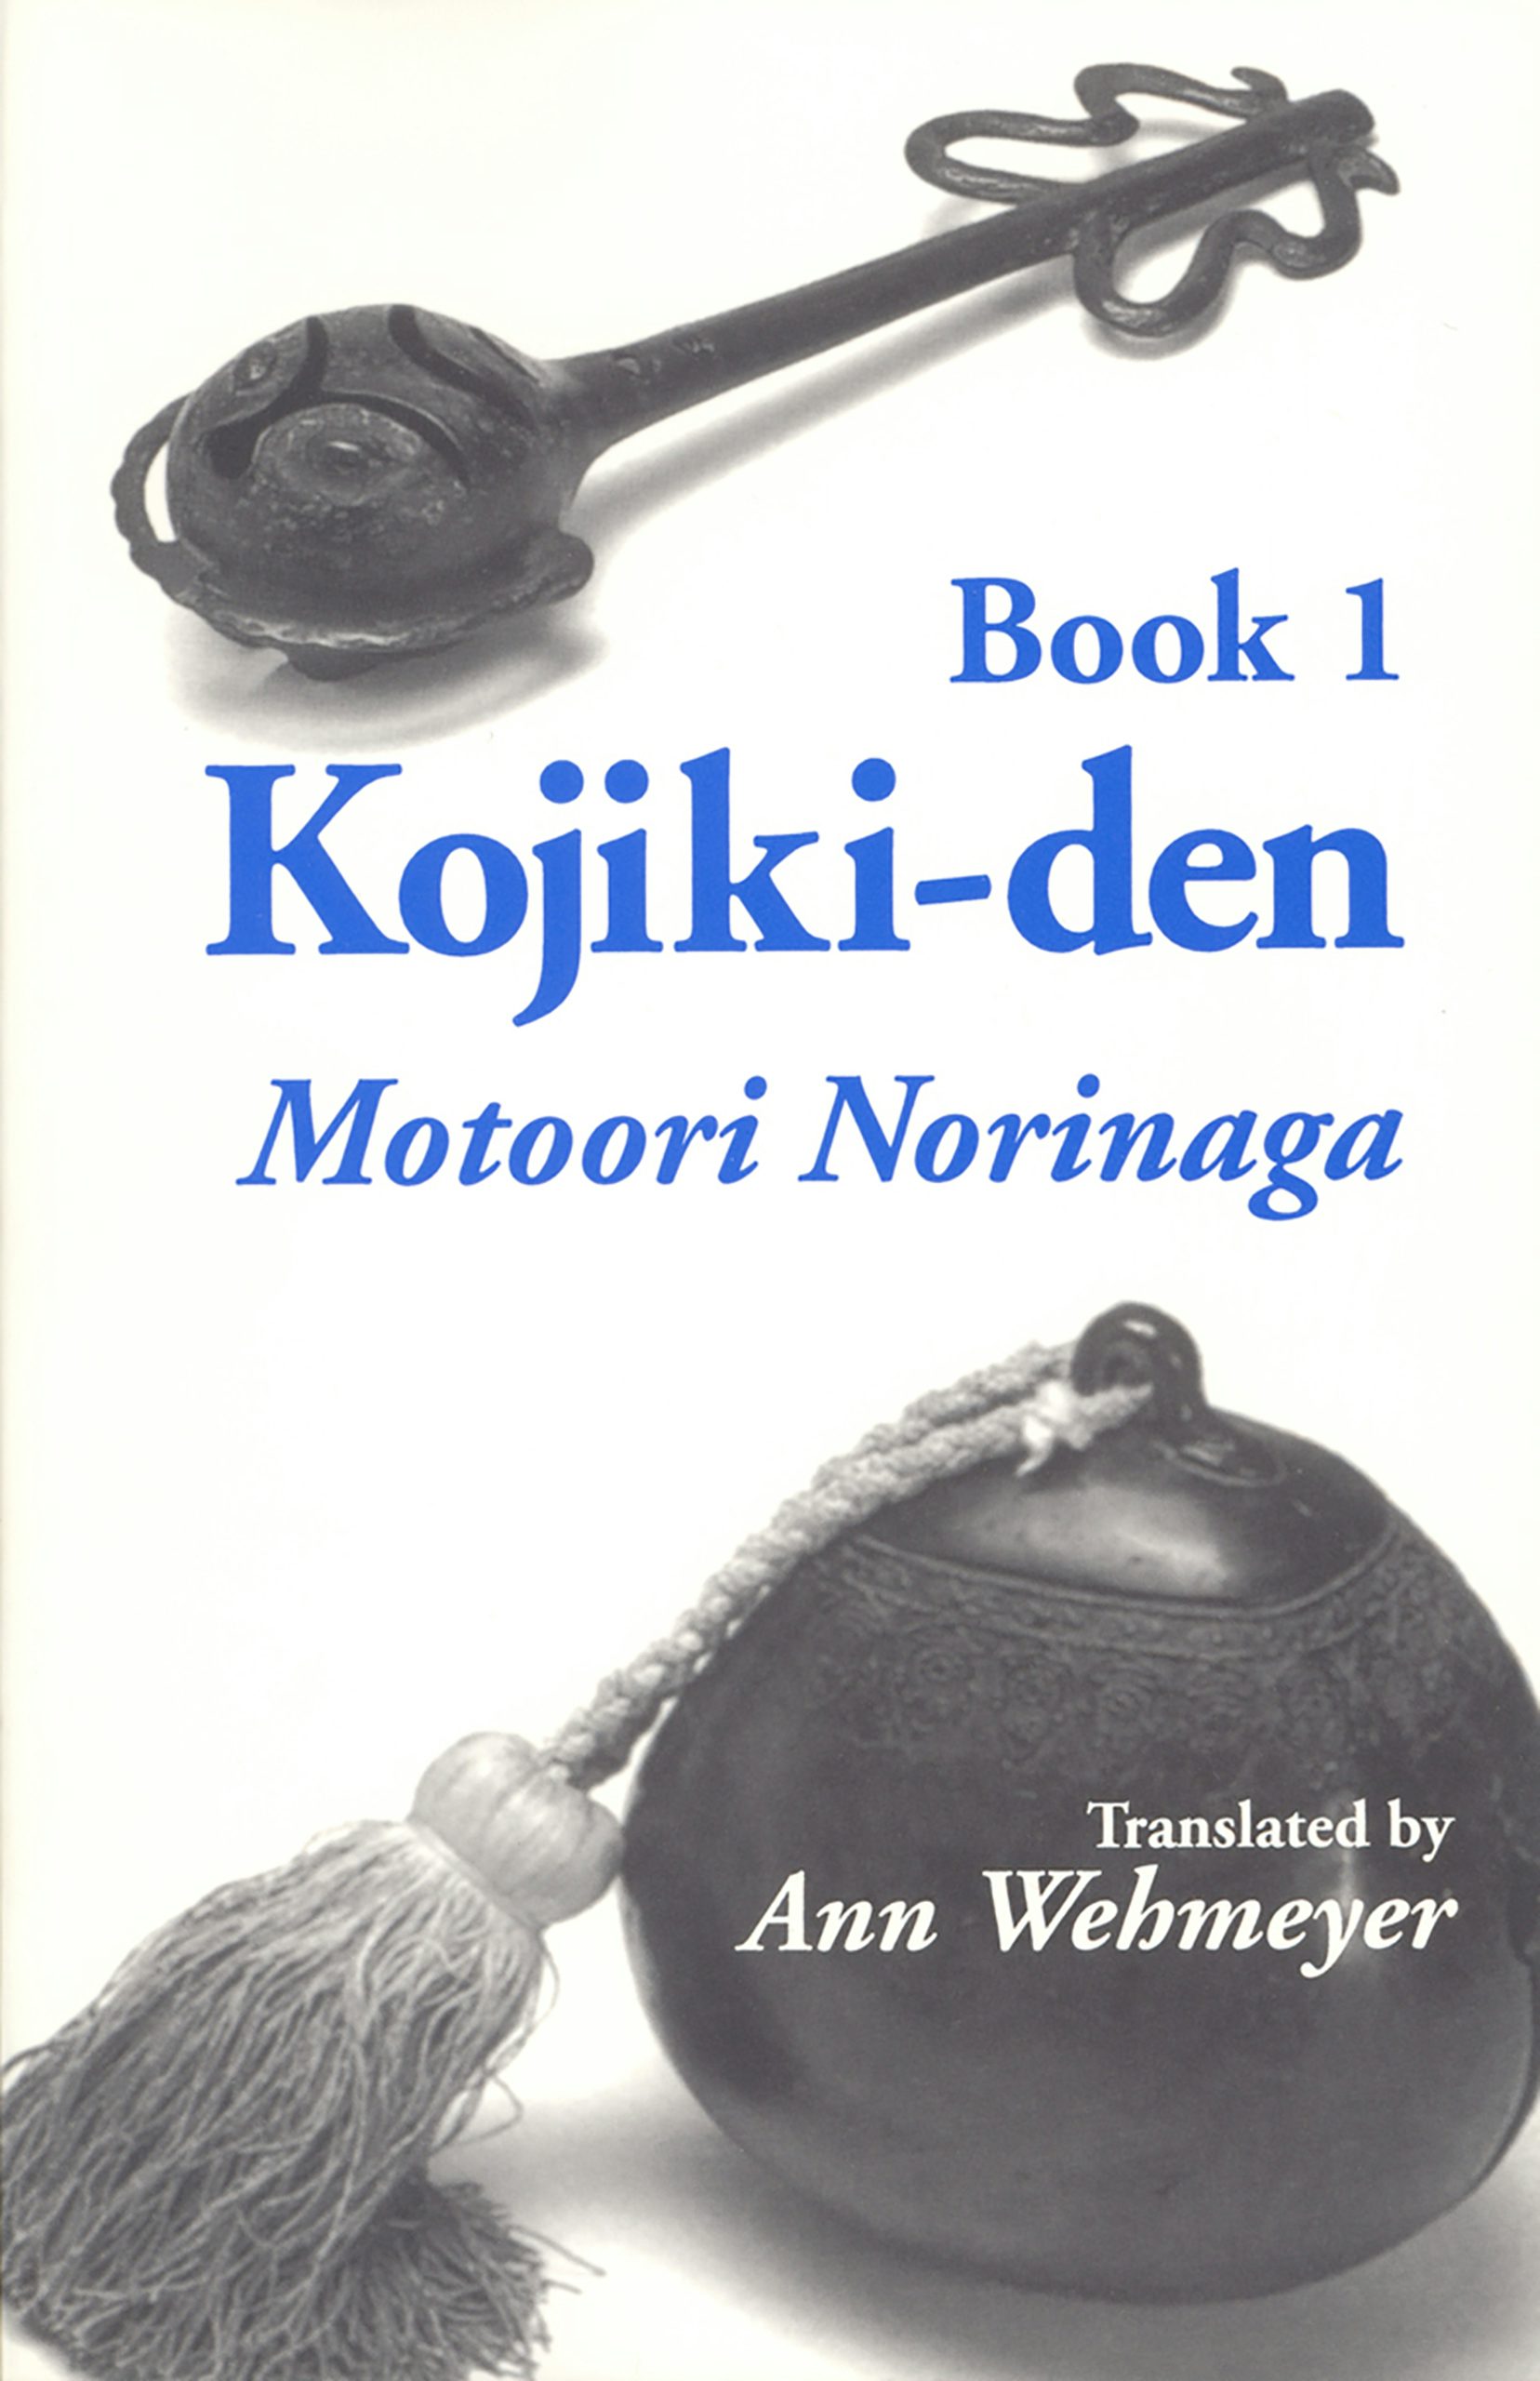 Kojiki-den by Motoori Norinaga,Translated by Ann Wehmeyer